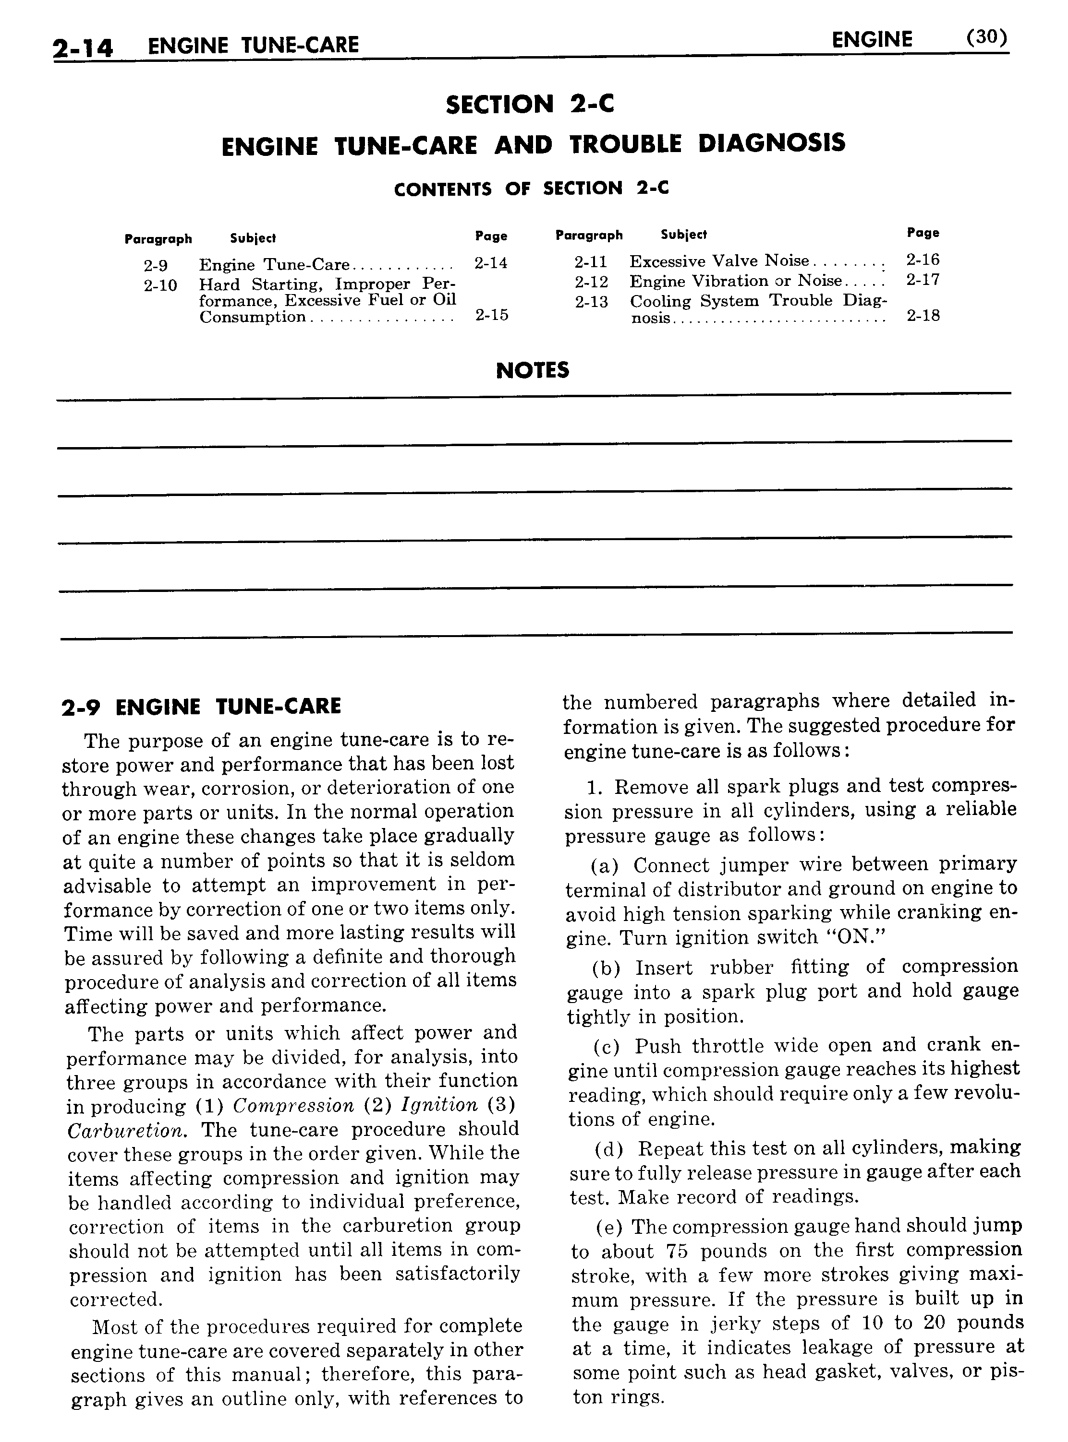 n_03 1956 Buick Shop Manual - Engine-014-014.jpg